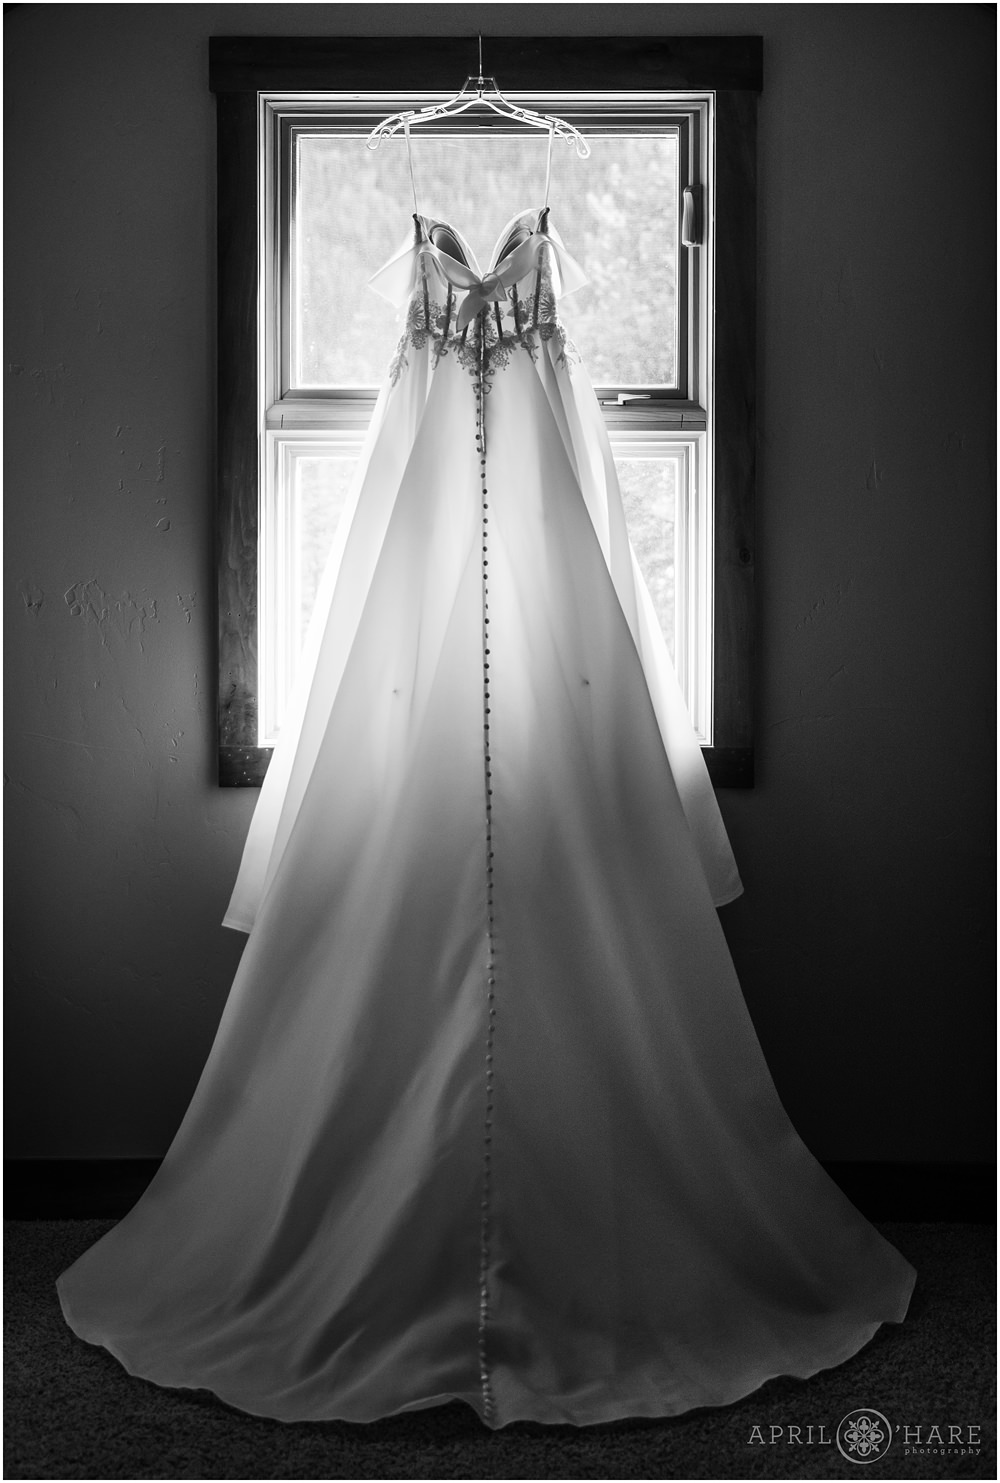 Romantic wedding dress hangs in the window at a Keystone Colorado wedding during winter